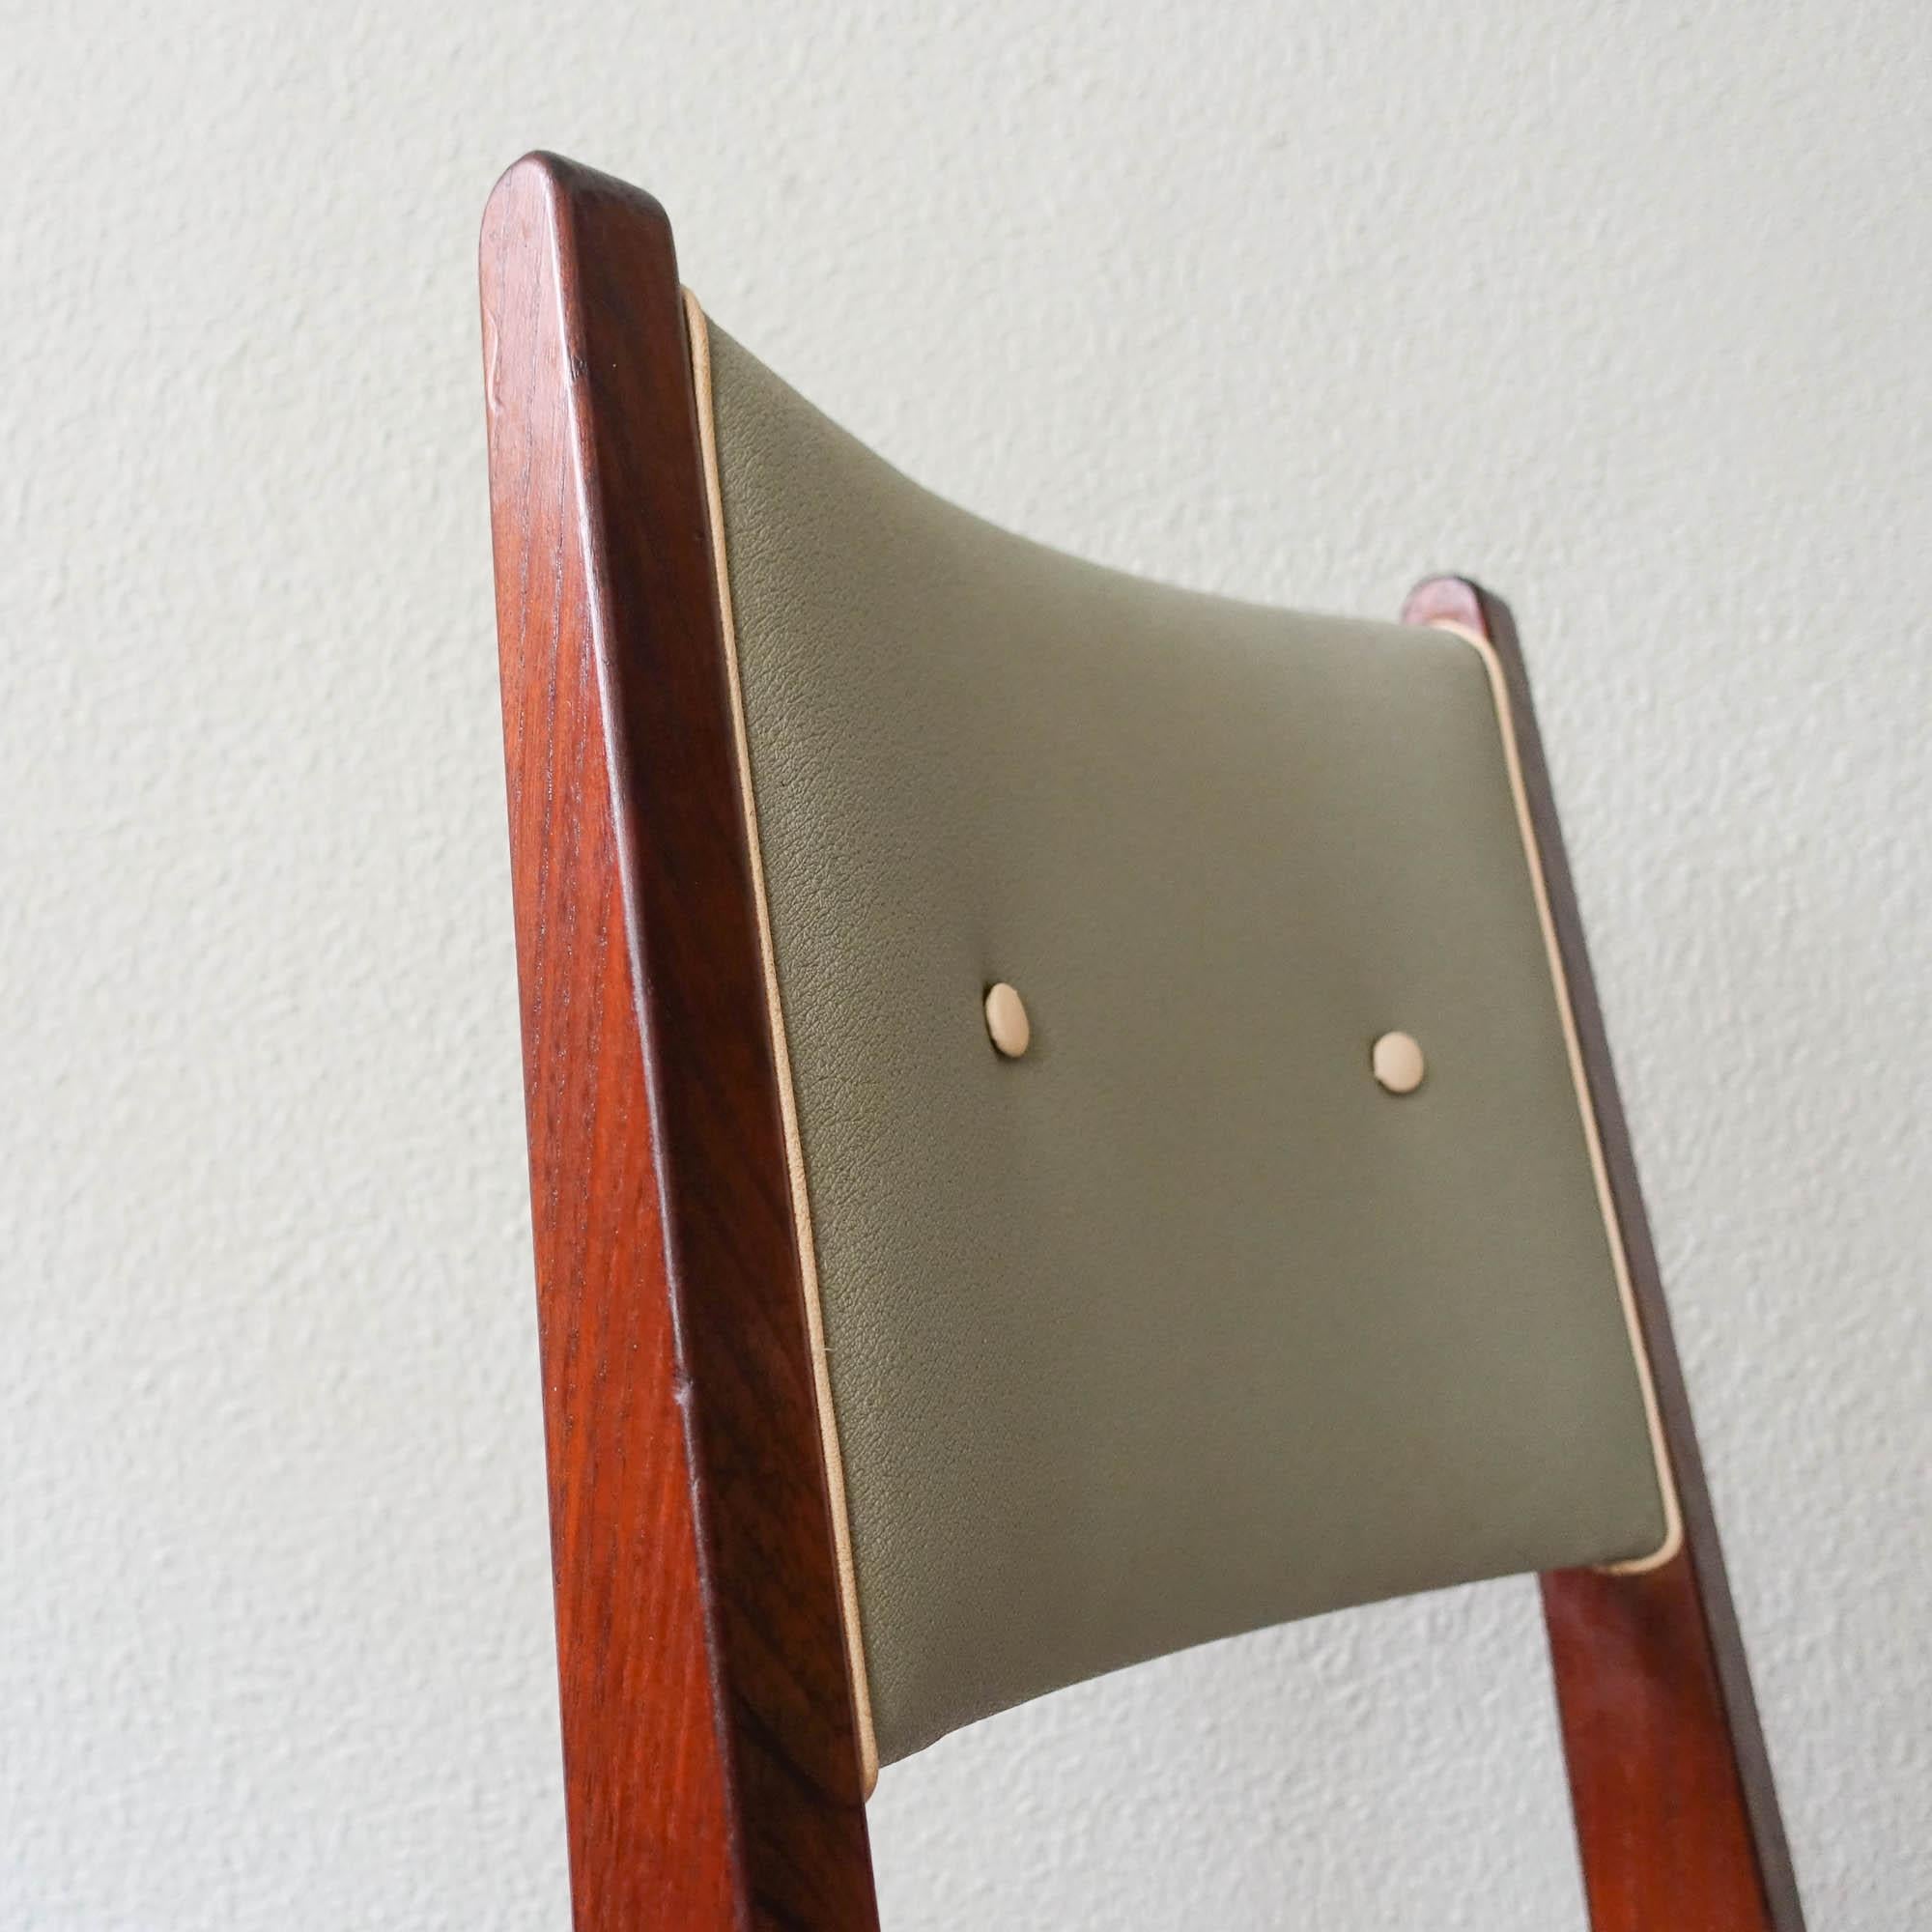 Chair, Model 